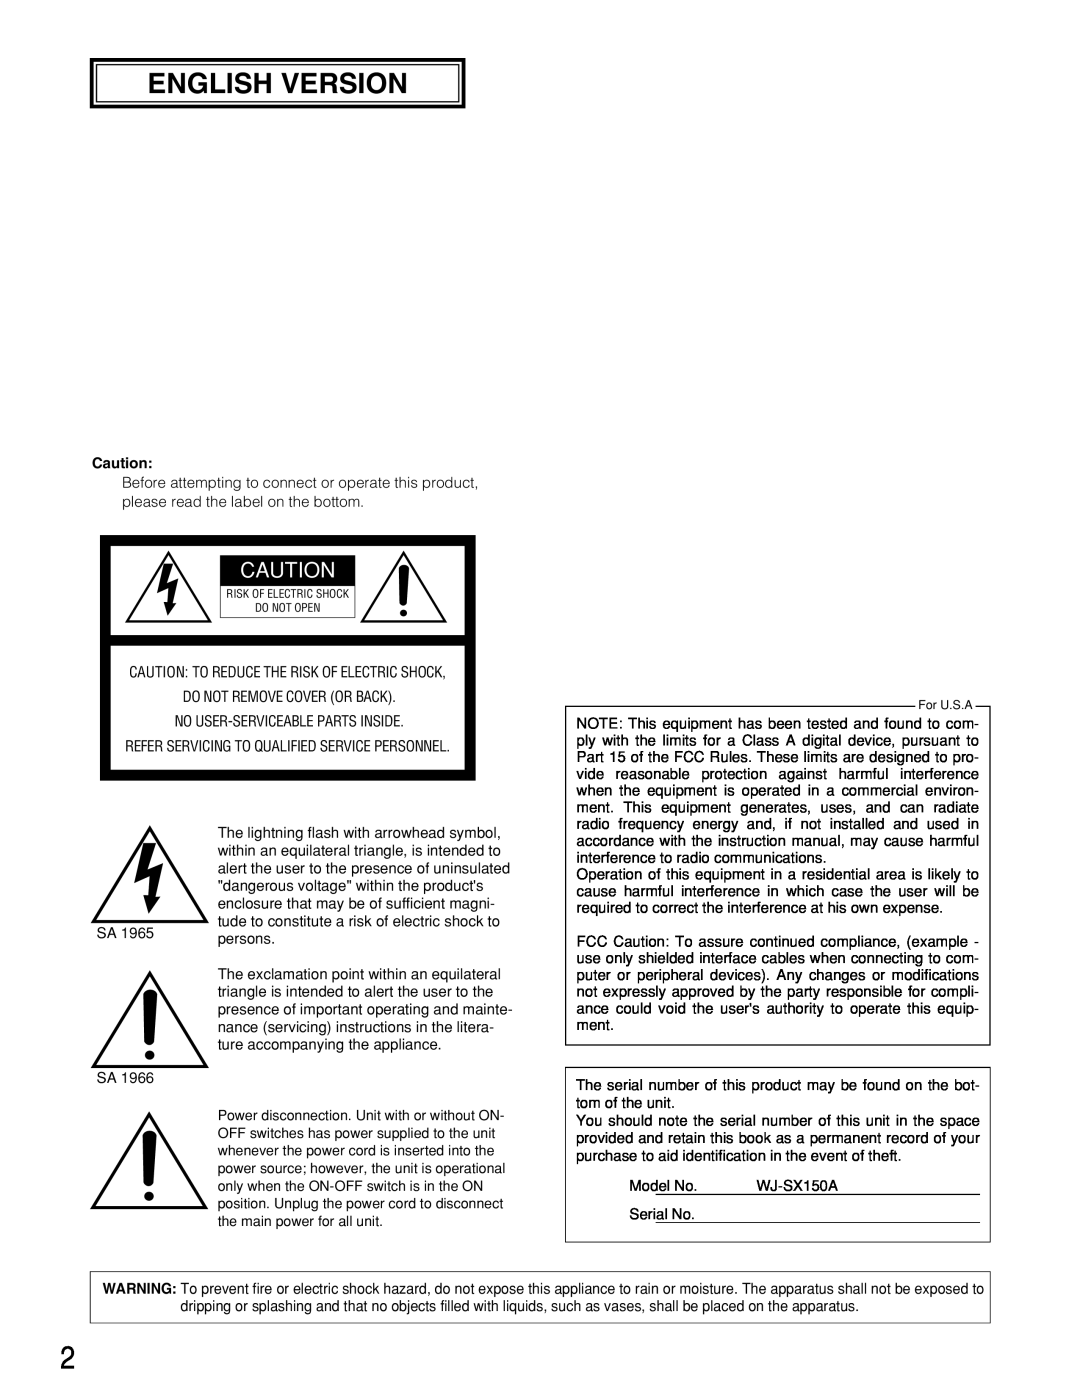 Panasonic WJ-SX150A manual English Version, Risk Of Electric Shock Do Not Open, For U.S.A 